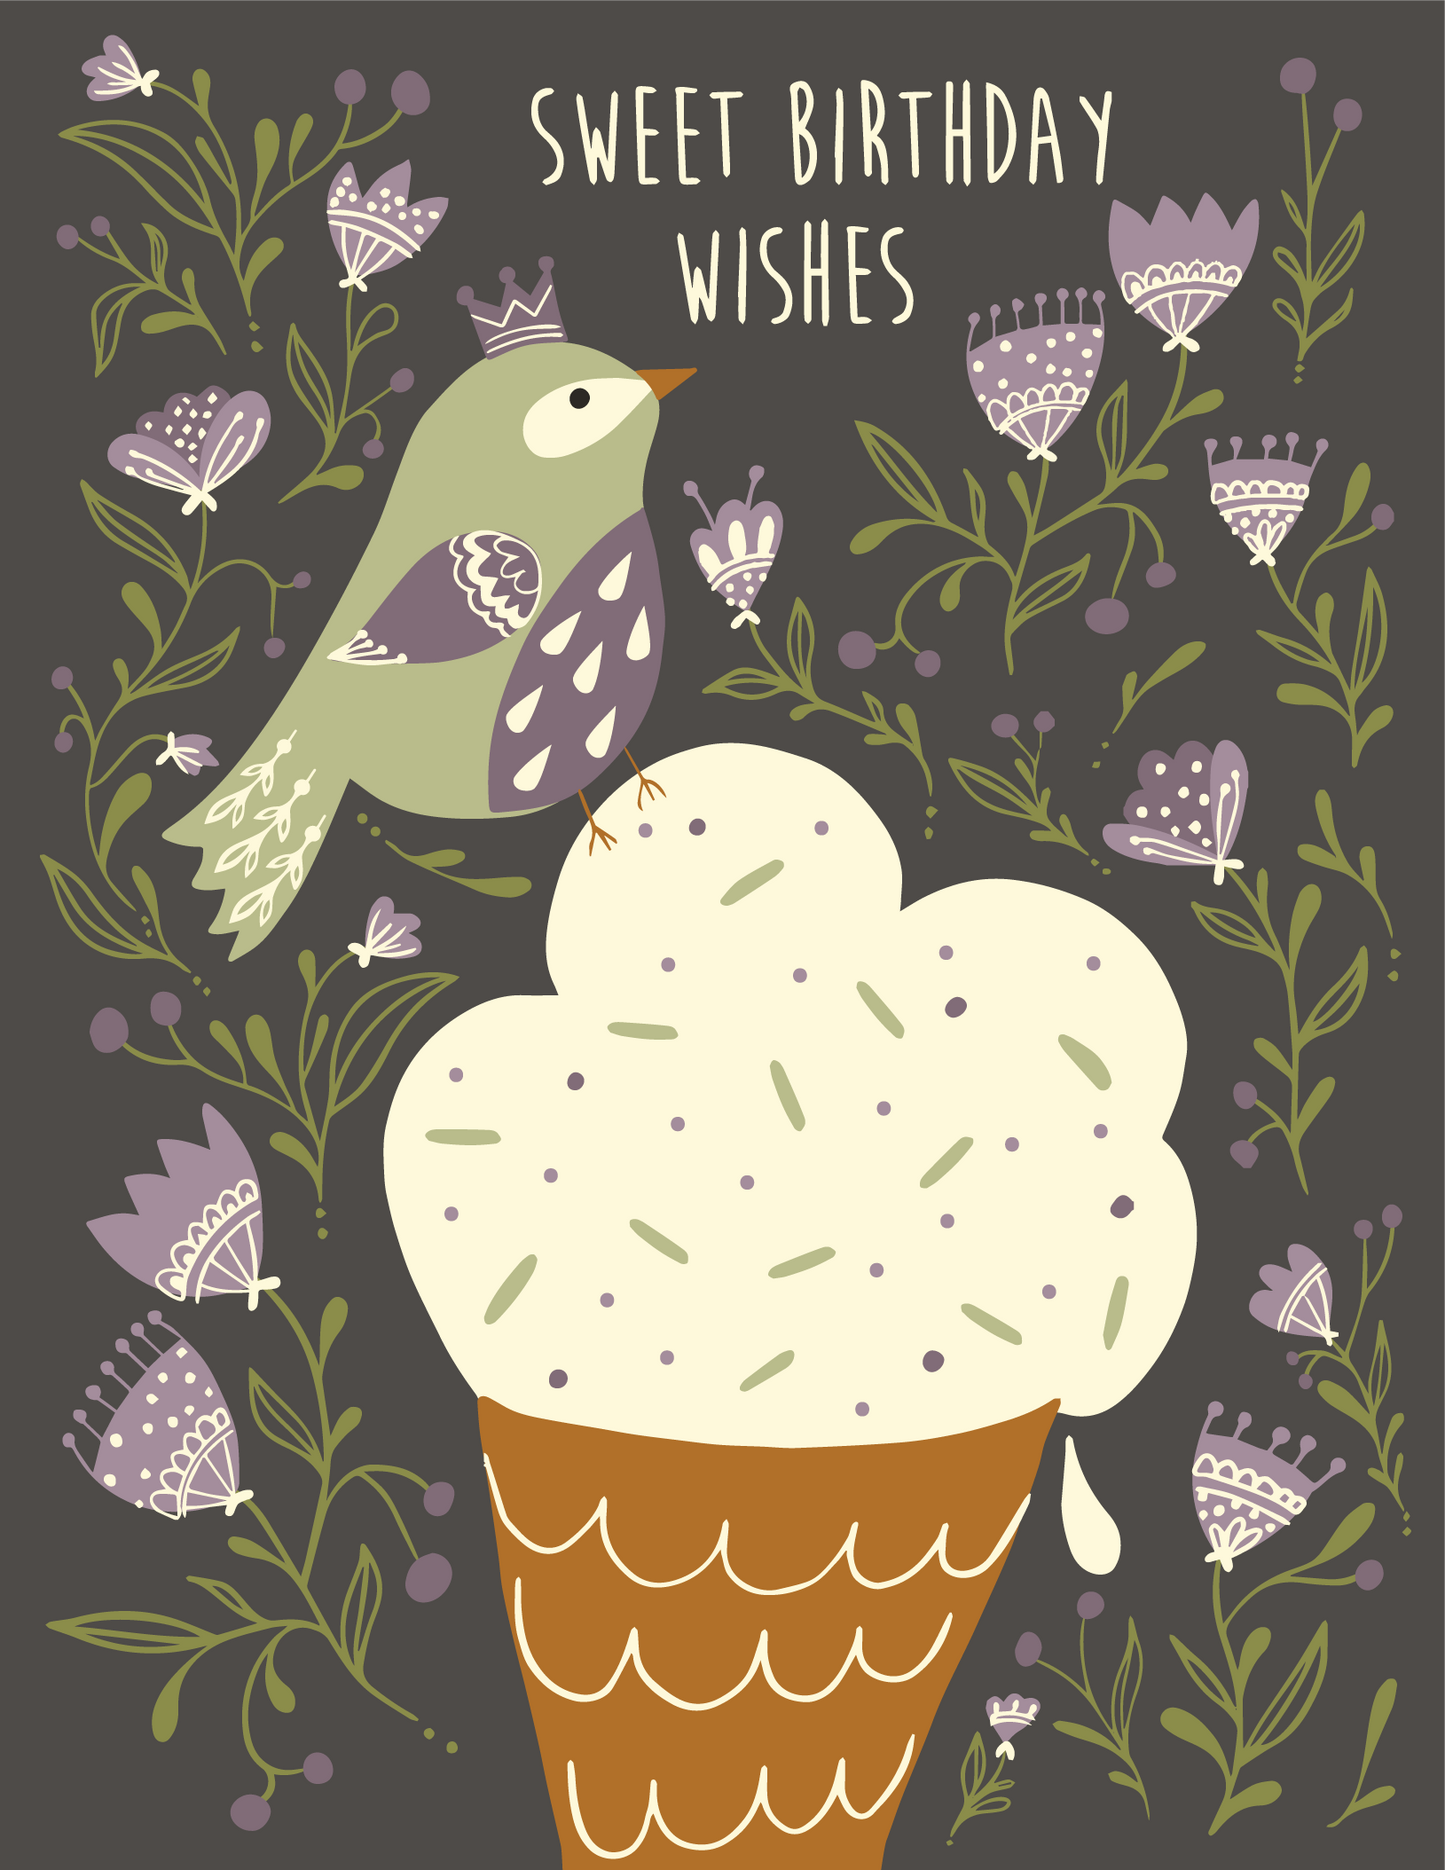 Sweet Birthday Wishes Greeting Card